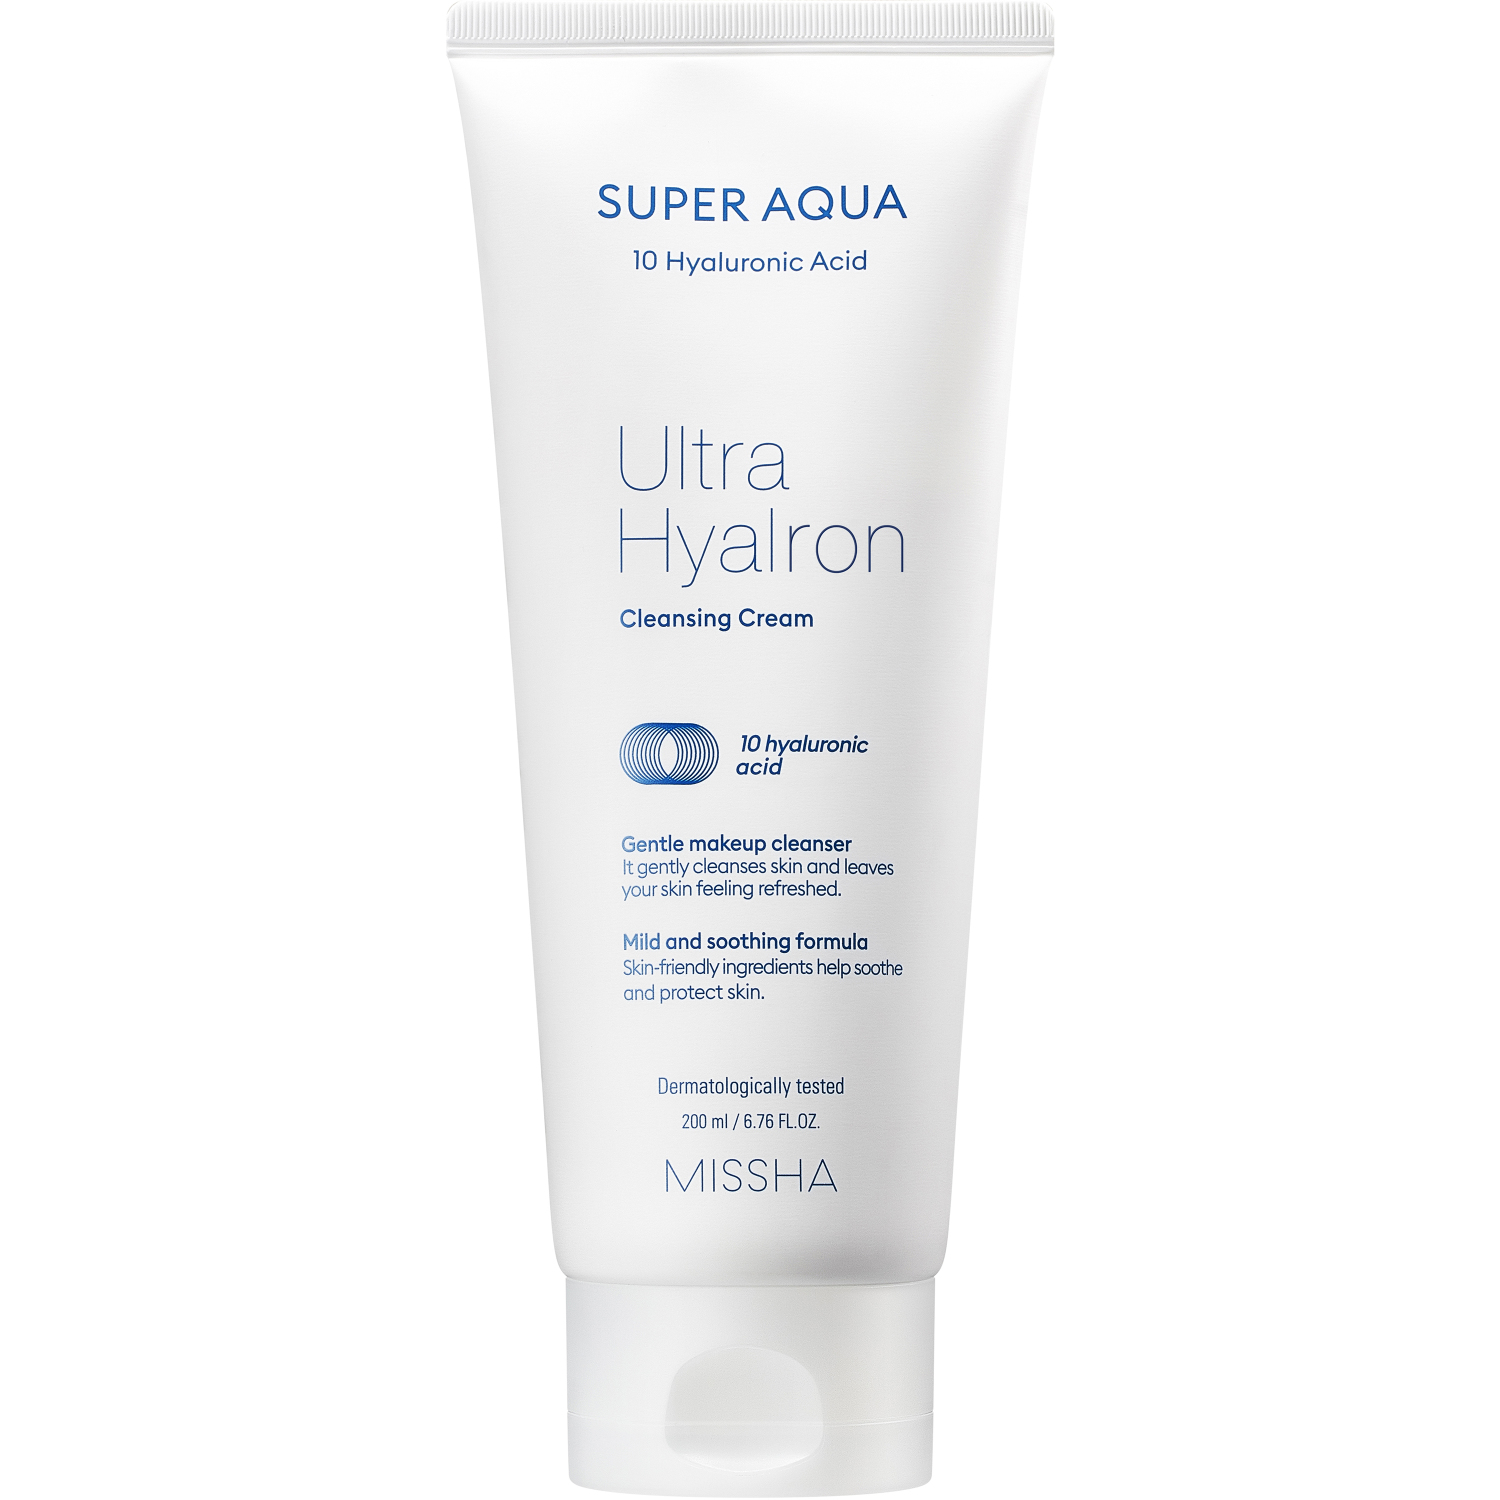 Пенка кремовая Missha Super Aqua Ultra Hyalron для умывания и снятия макияжа, 200 мл сыворотка biore для умывания и снятия макияжа 230 мл